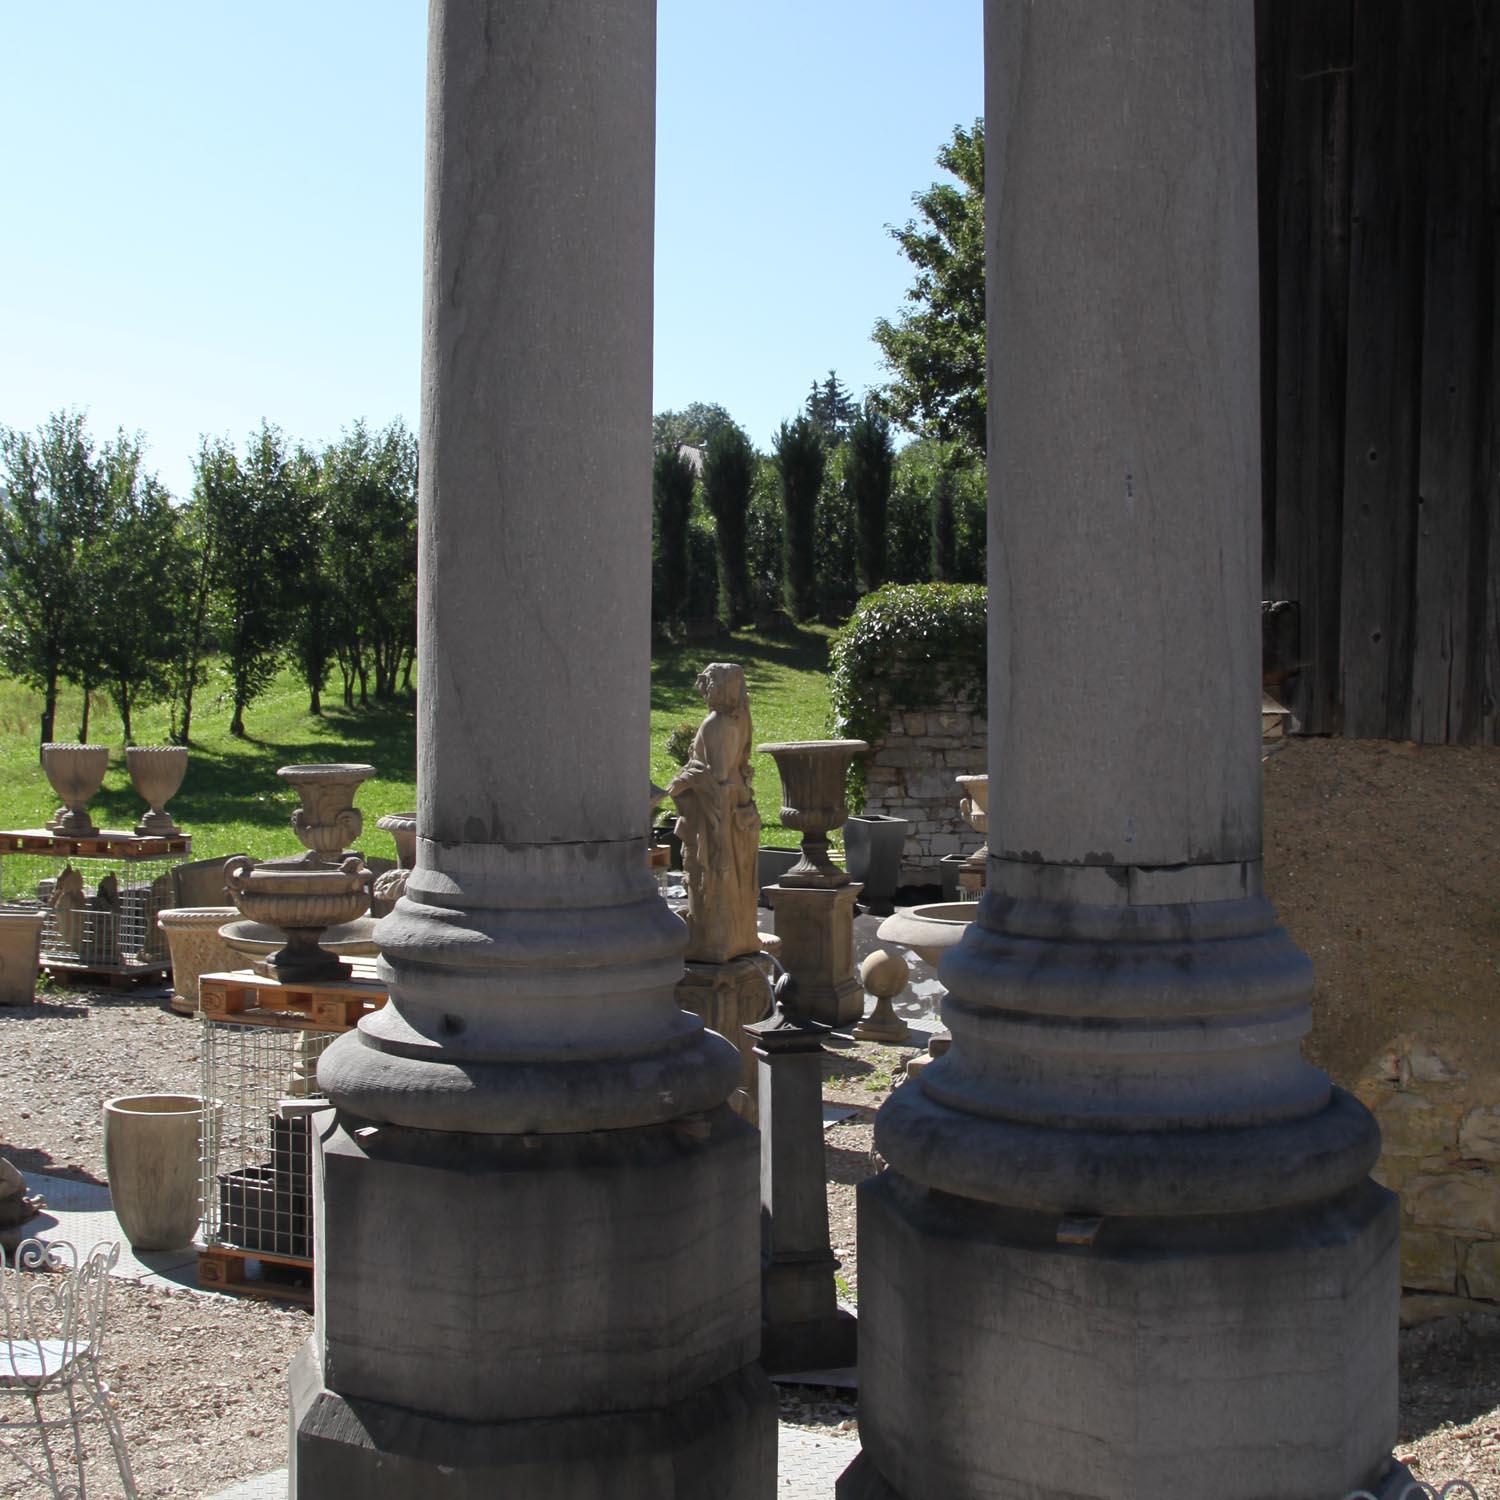 European Monumental Pair of Columns For Sale